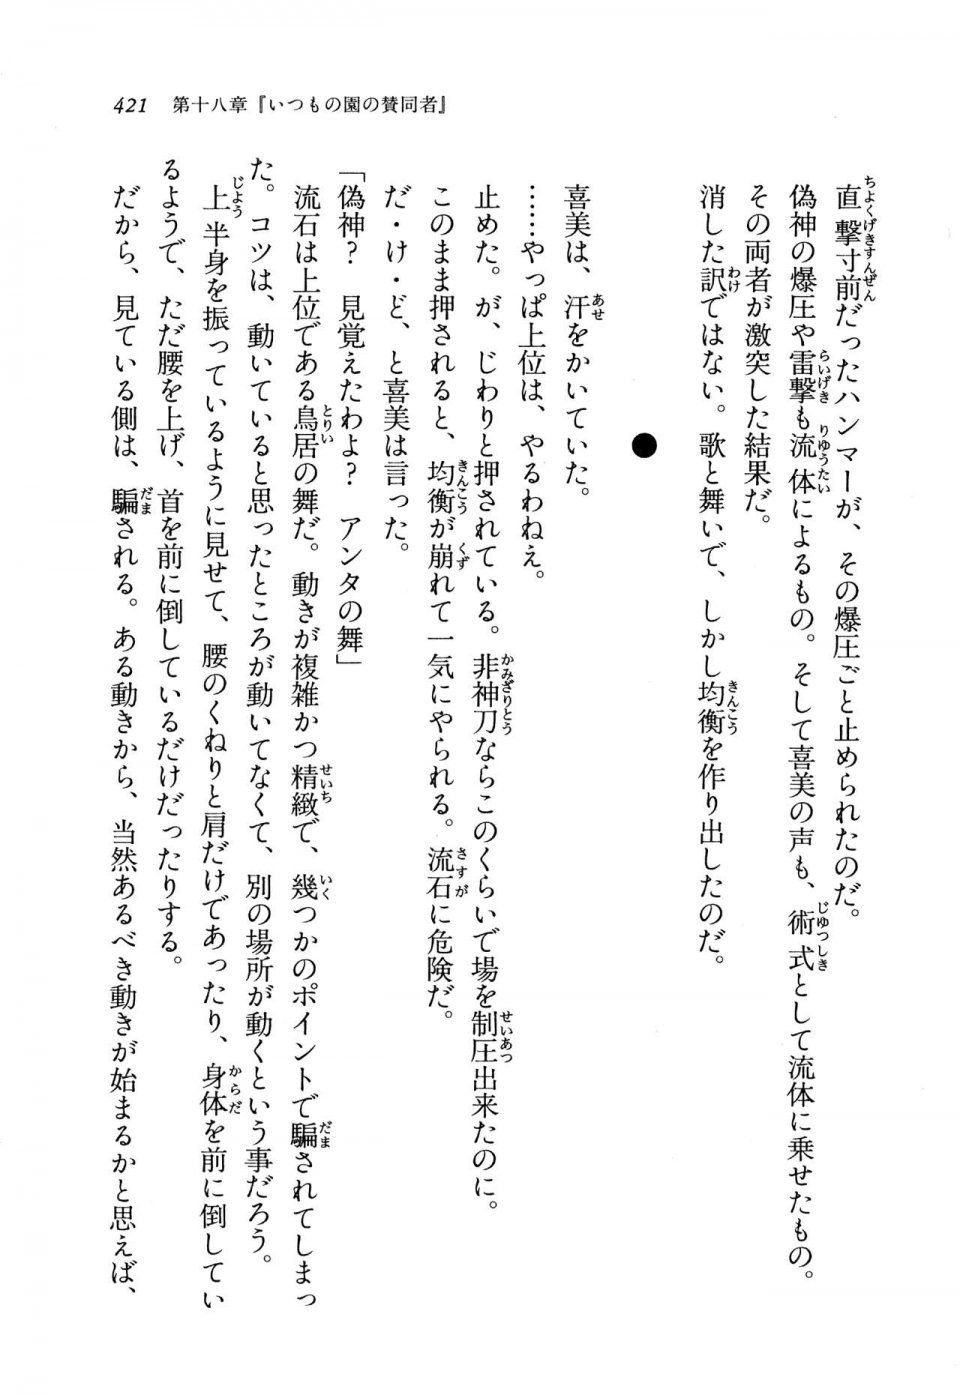 Kyoukai Senjou no Horizon BD Special Mininovel Vol 8(4B) - Photo #425